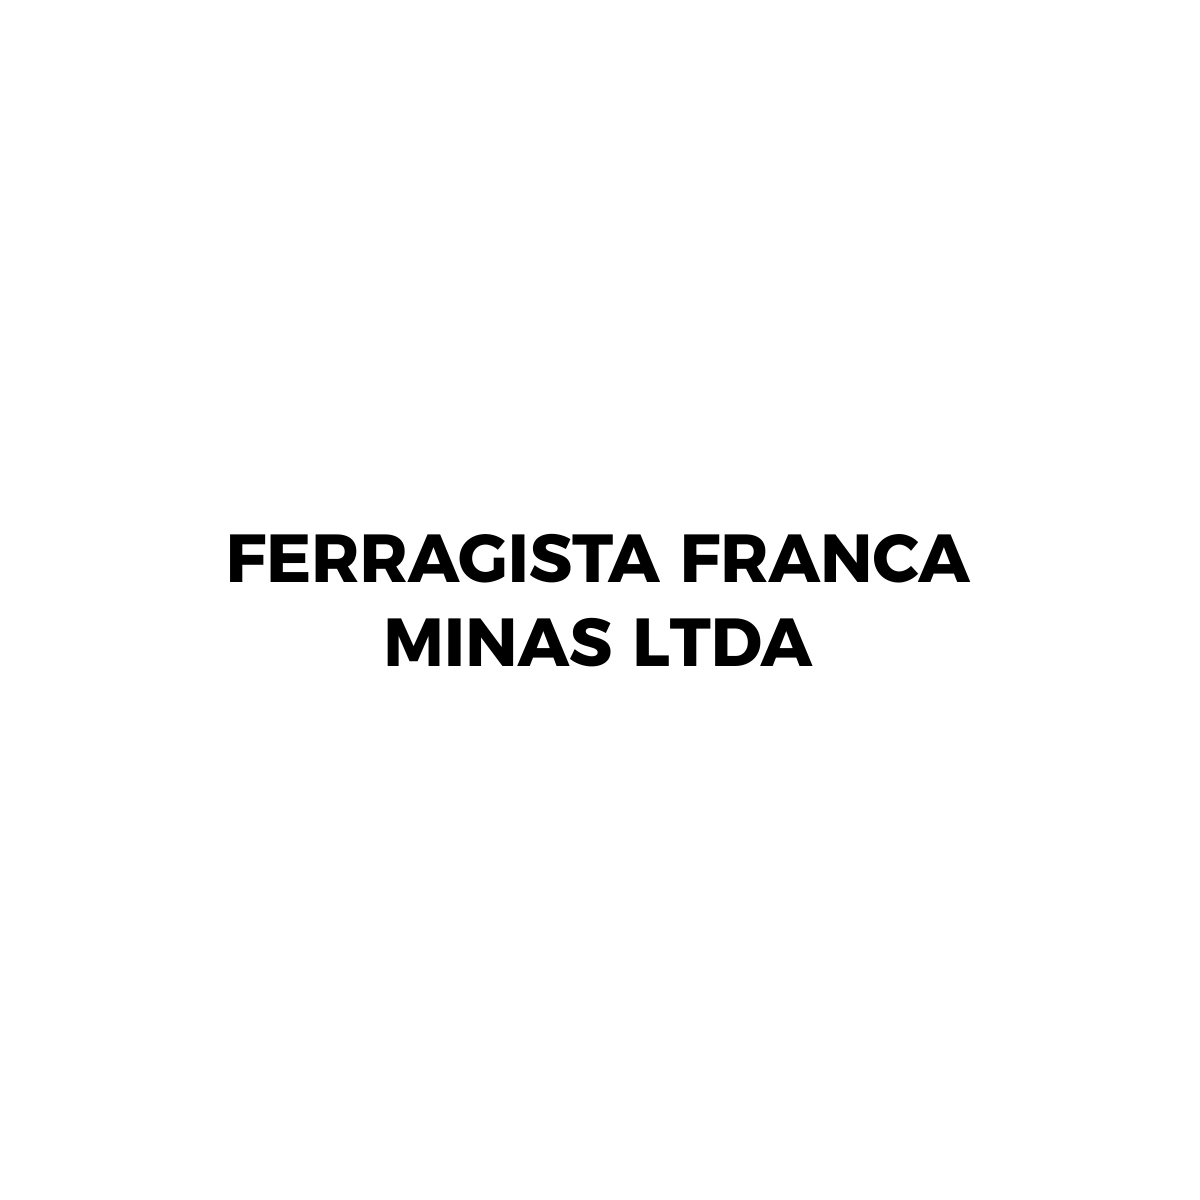 Ferragista Franca Minas Ltda